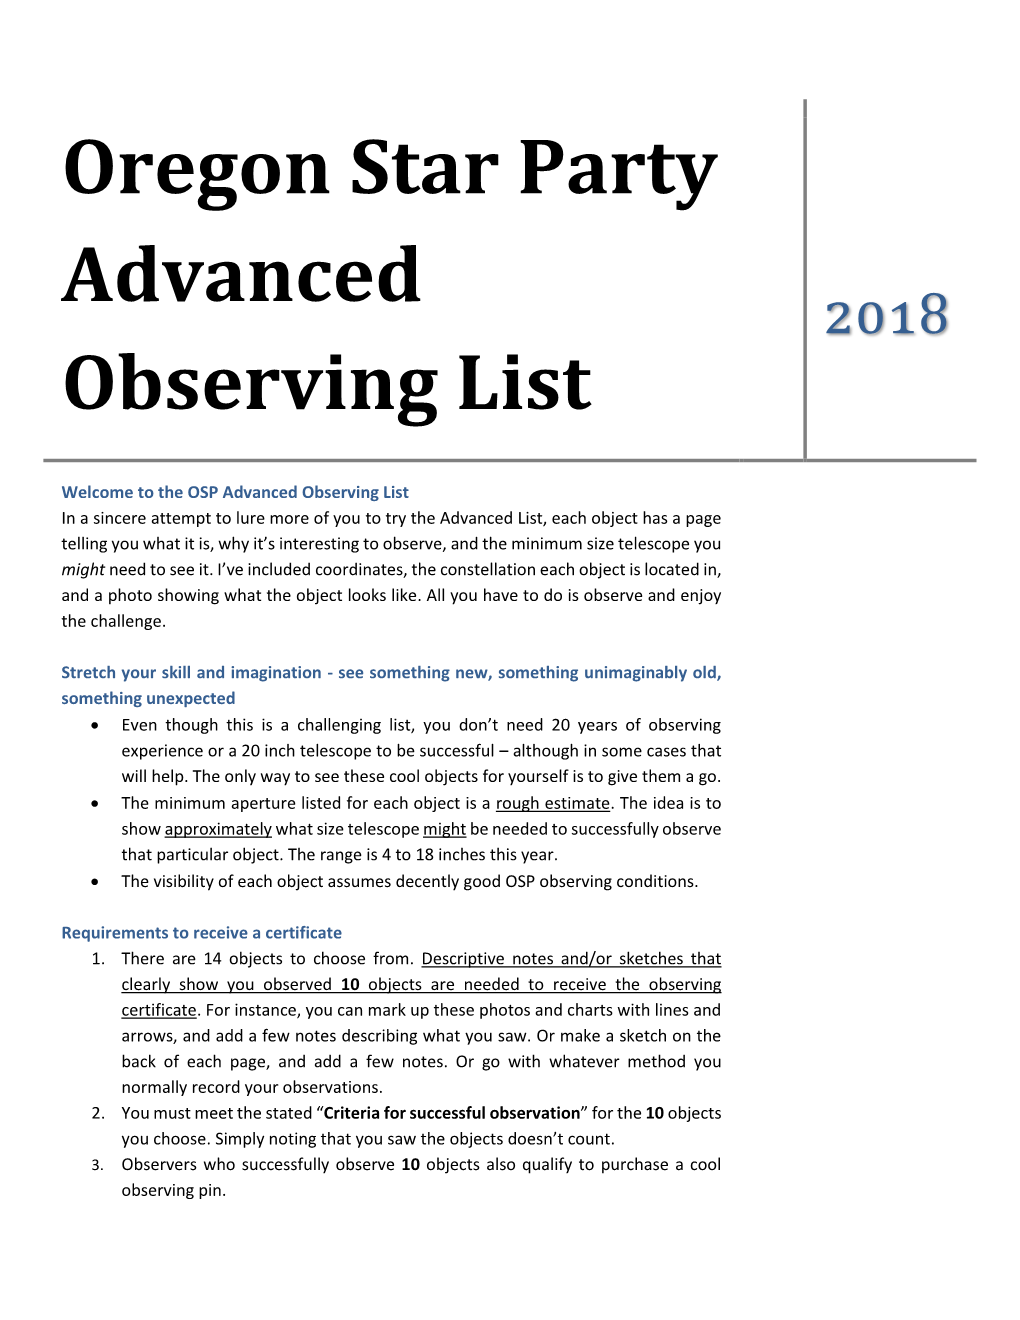 Oregon Star Party Advanced Observing List